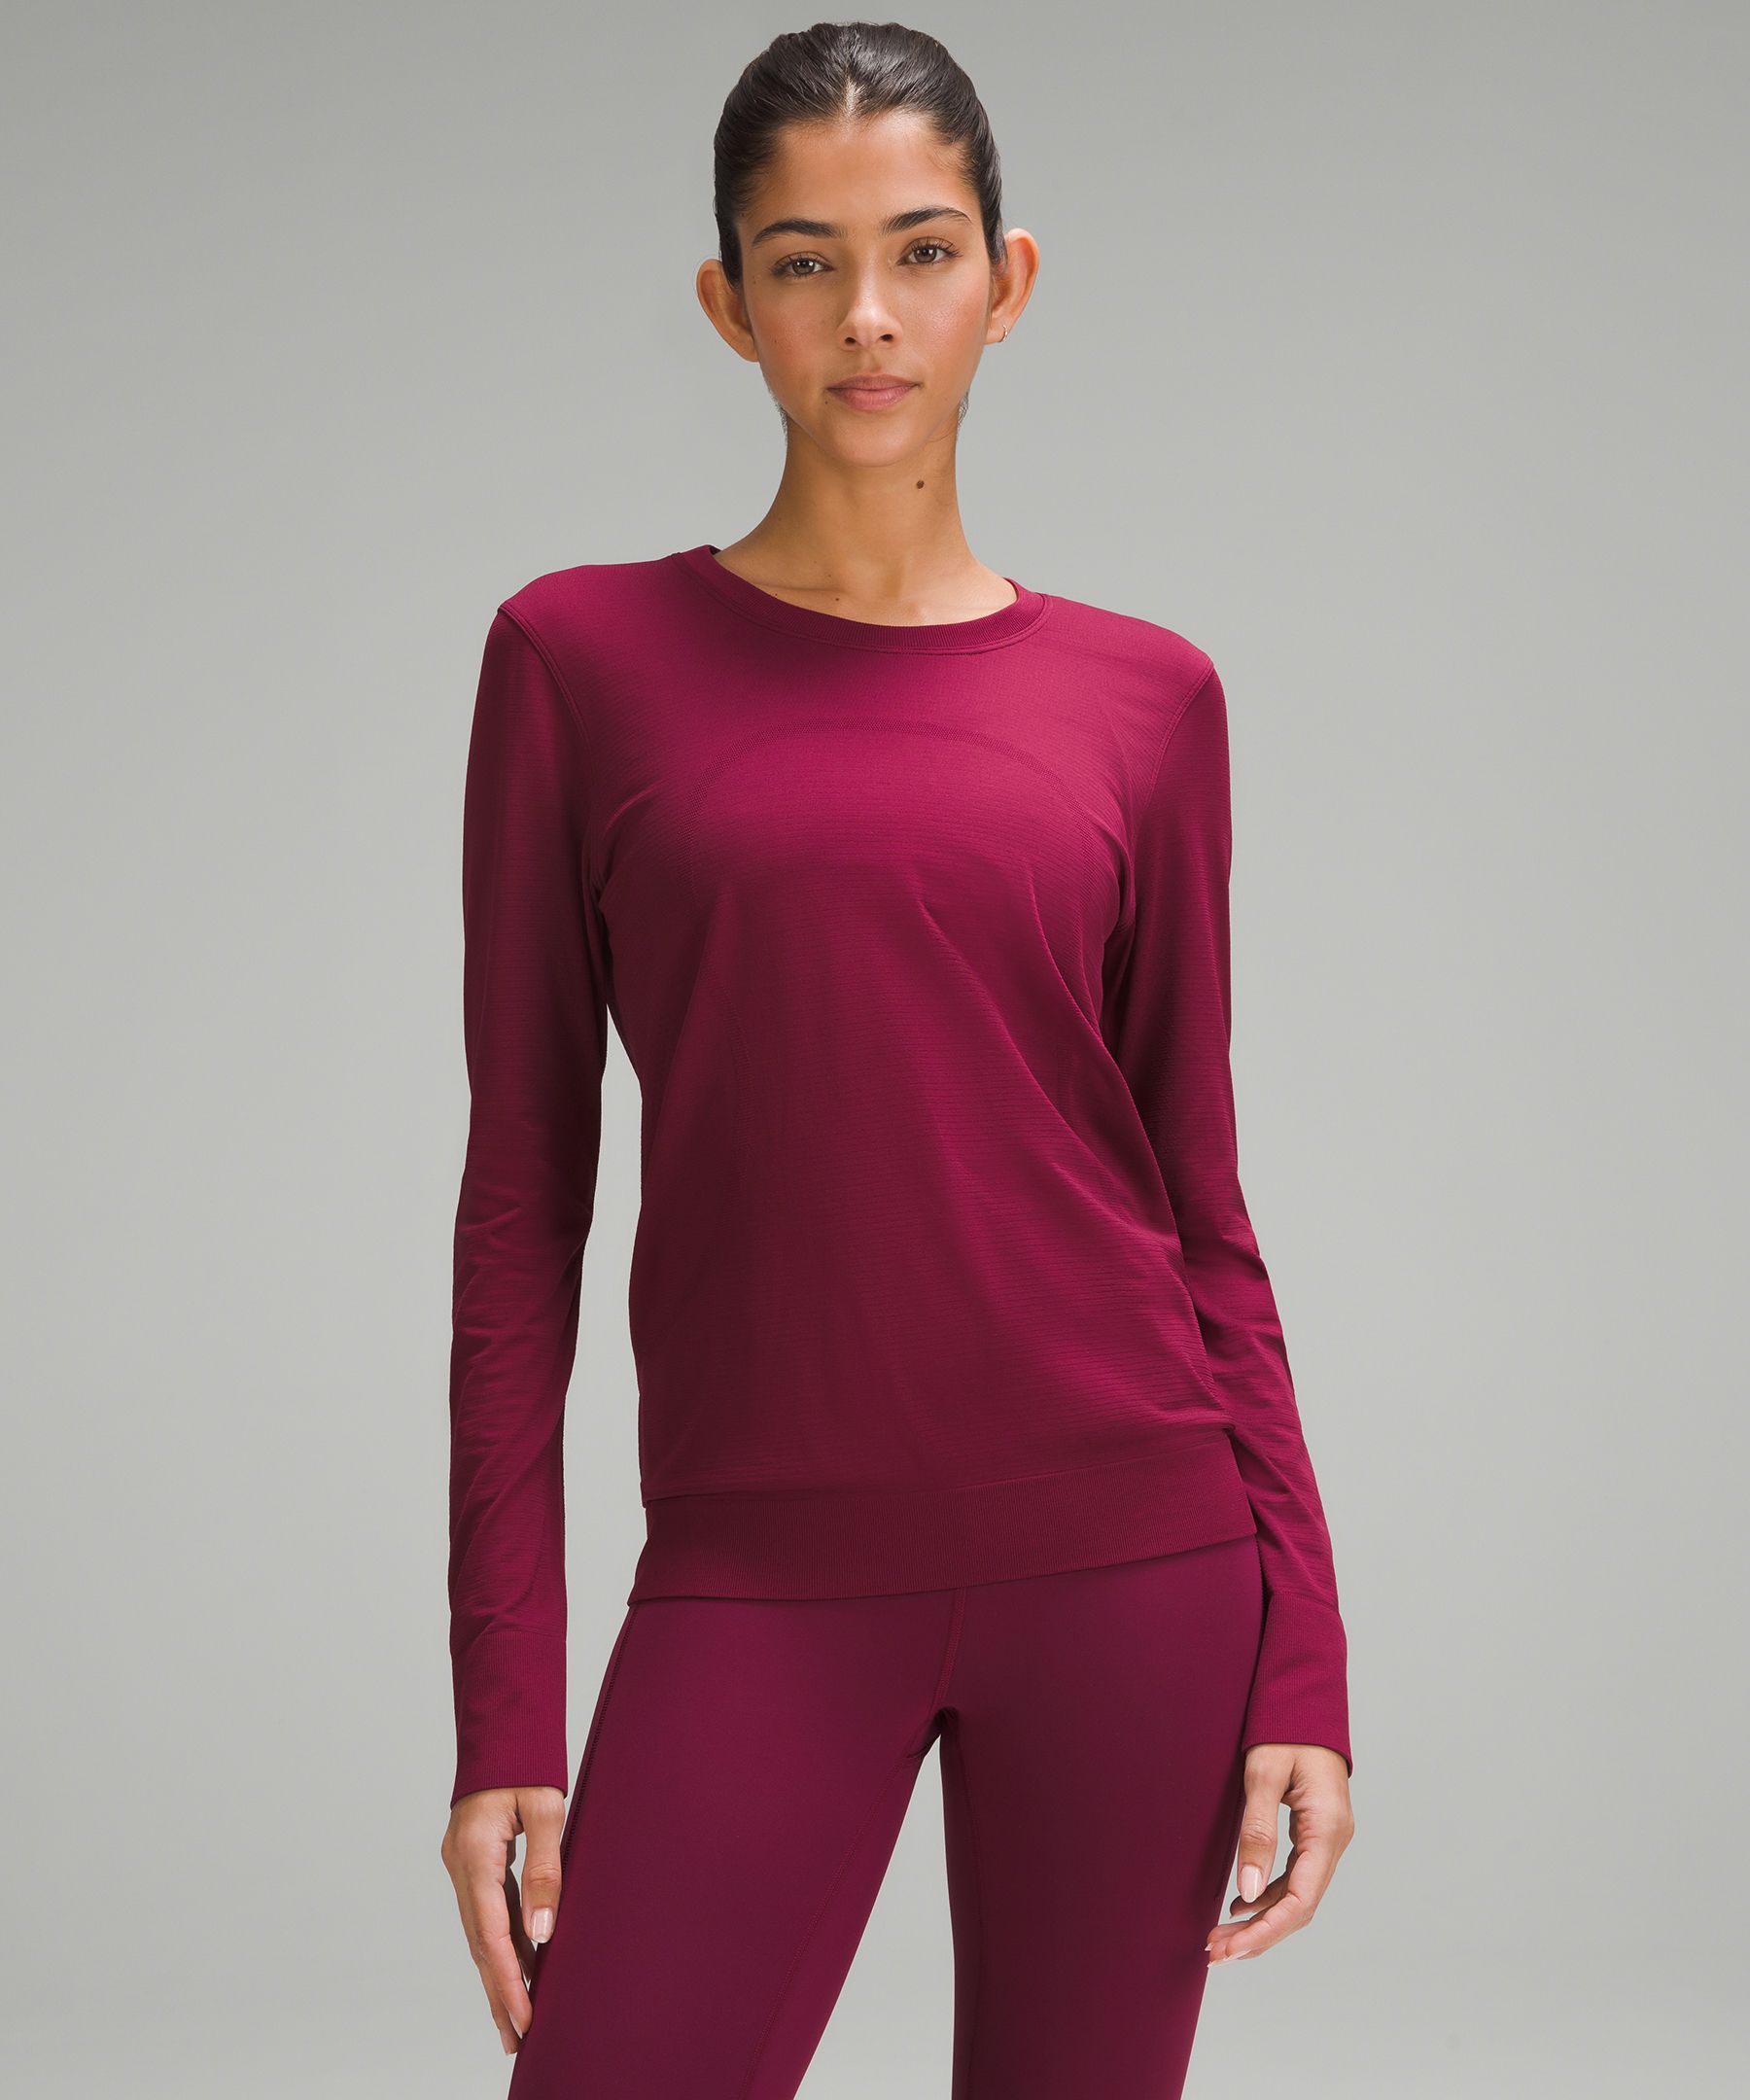 Swiftly Relaxed Long-Sleeve Shirt | Women's Long Sleeve Shirts | lululemon